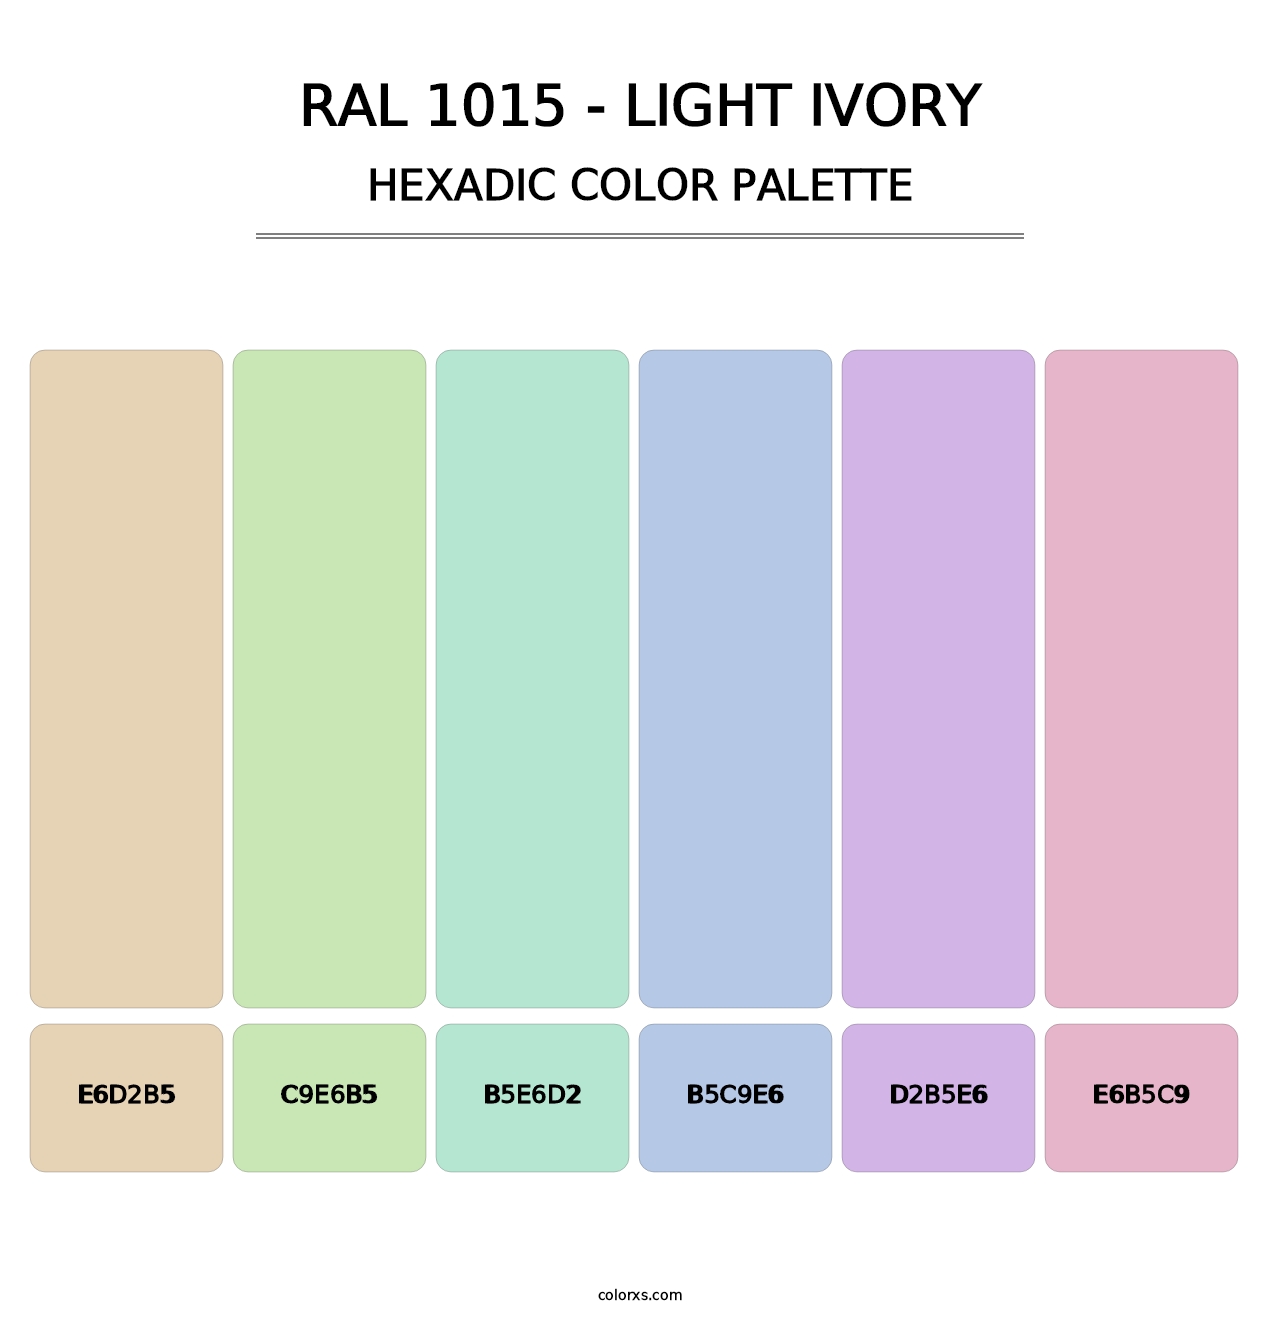 RAL 1015 - Light Ivory - Hexadic Color Palette